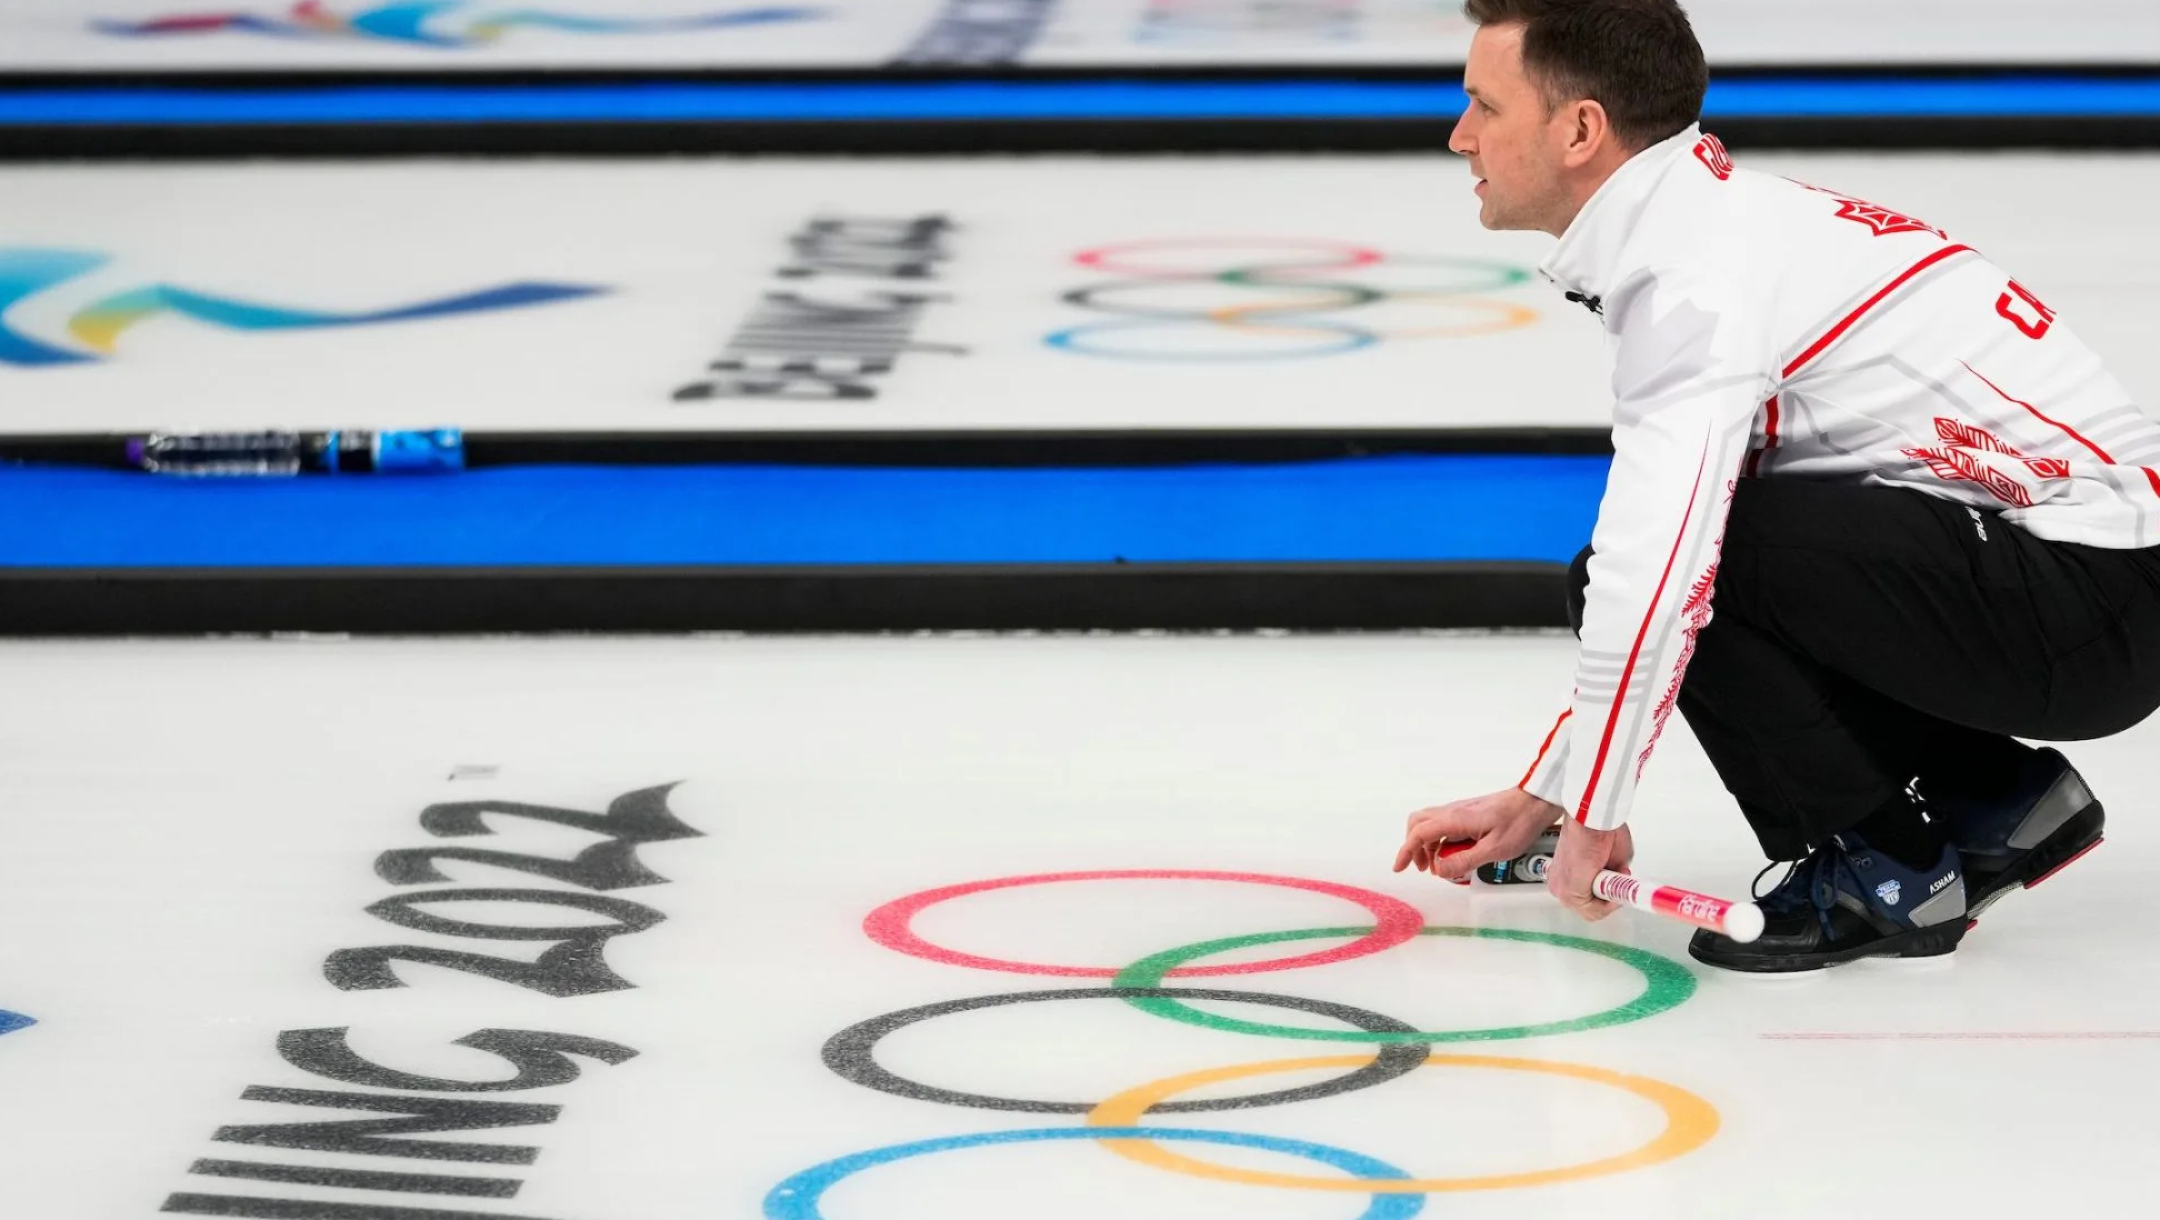 Curling: Brad Gushue, A Canadian curler, Beijing 2022 bronze medalist. 2160x1220 HD Background.